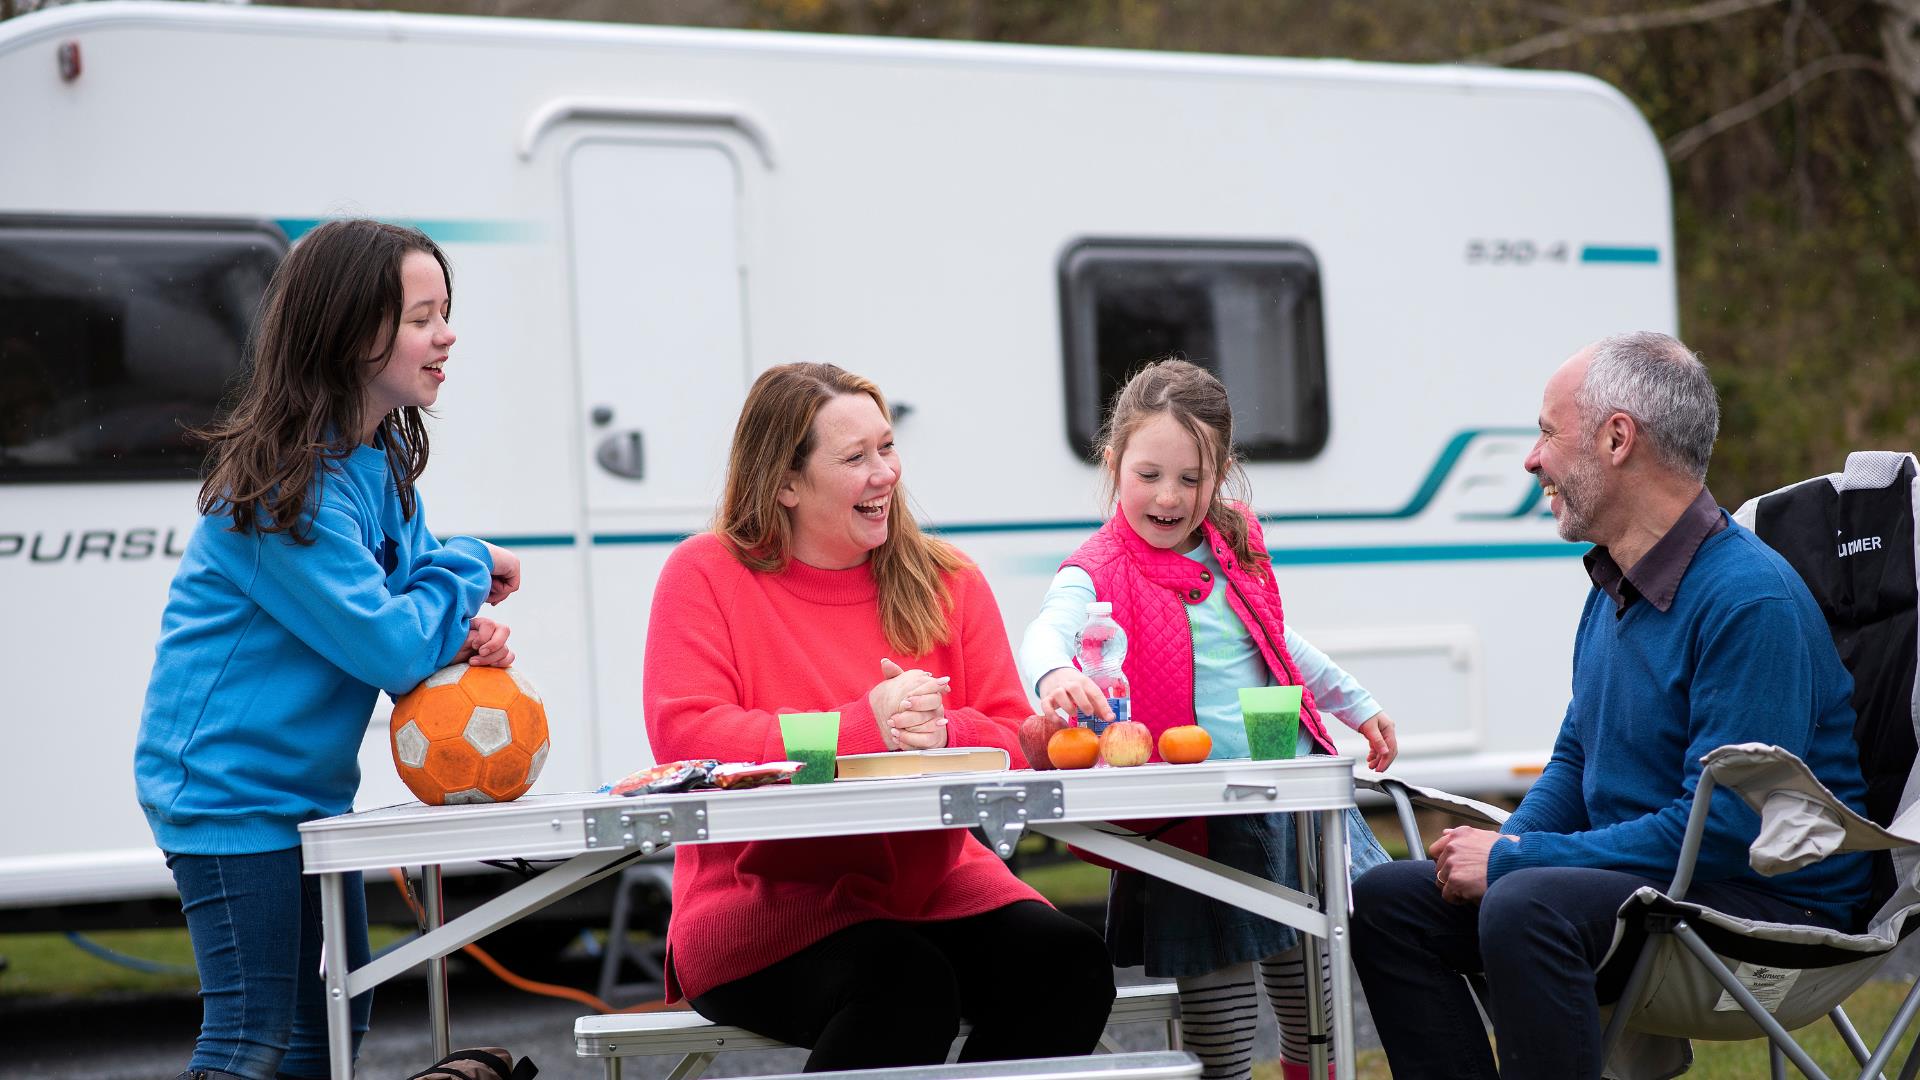 Family of four enjoying at snack outside their caravan